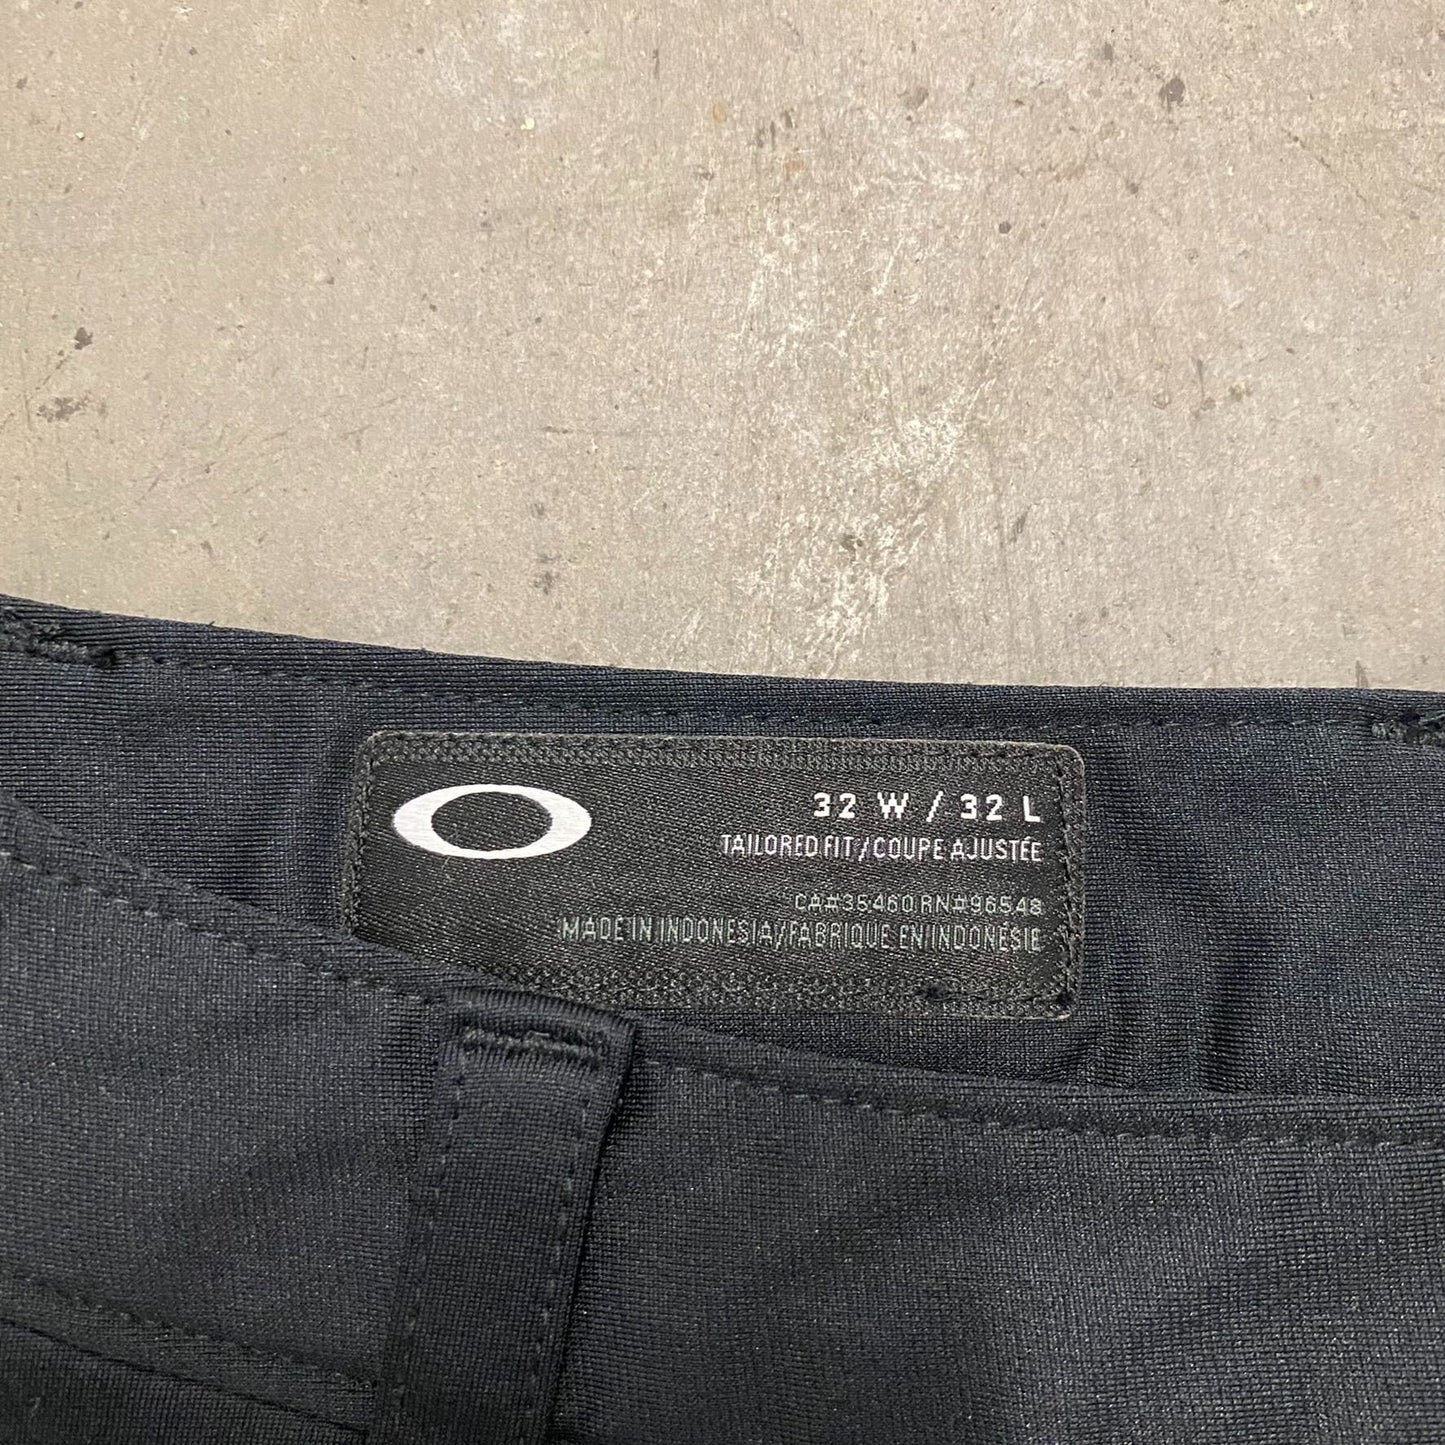 Oakley Logo Essential Black Slim Tailor Fit Active Golf Pants